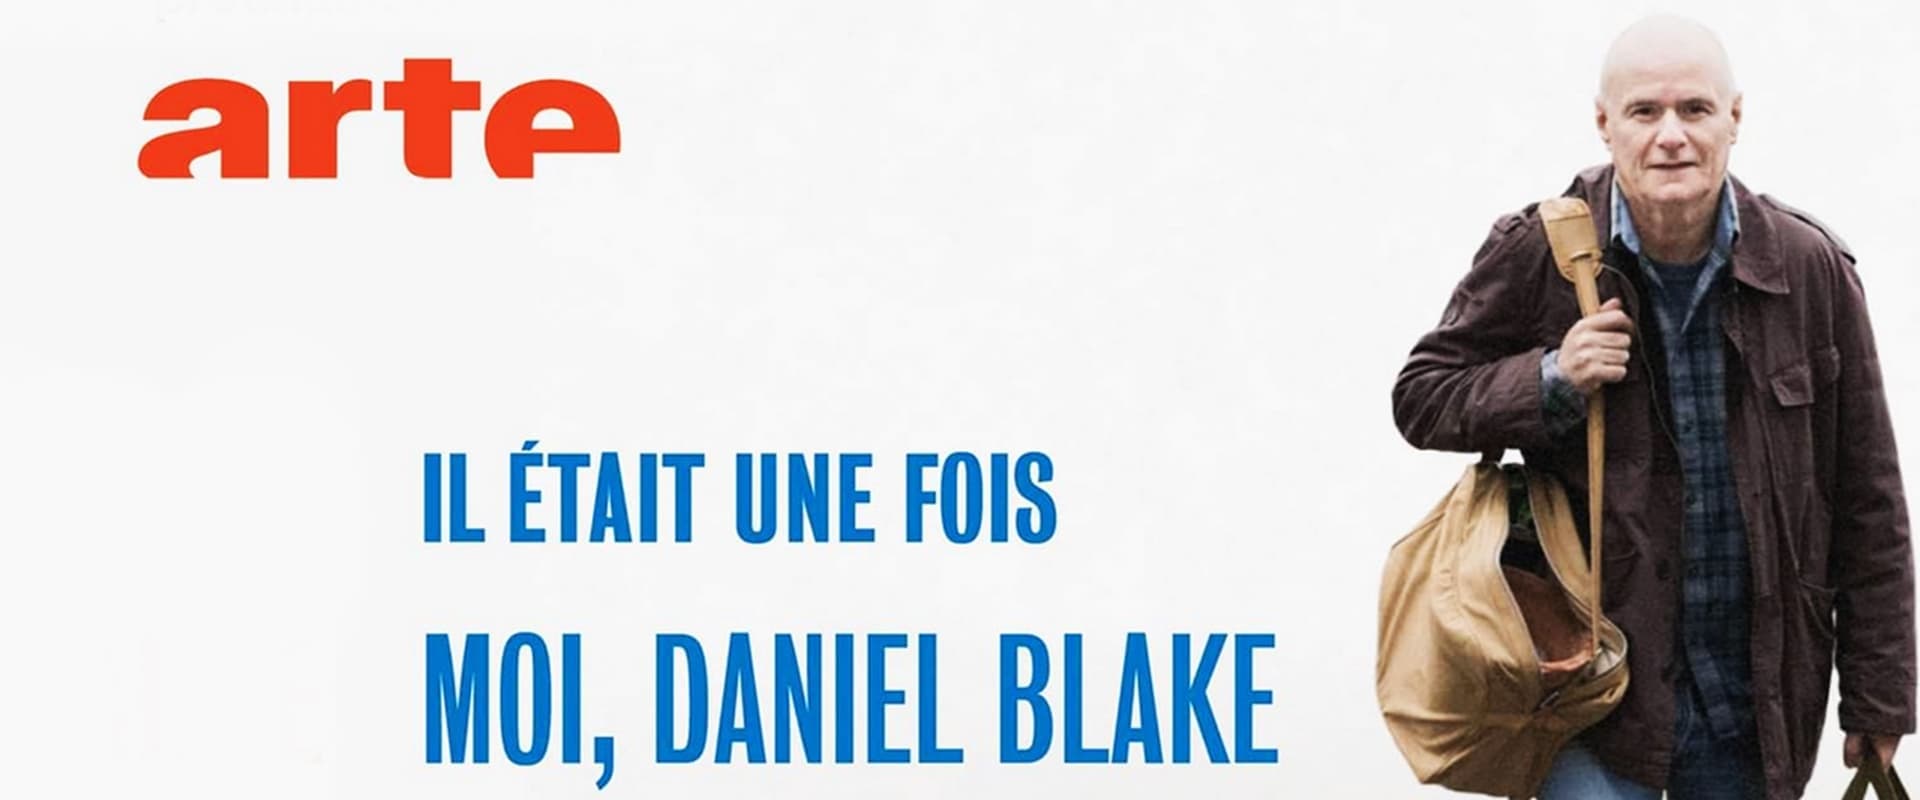 Once upon a time... "I, Daniel Blake"